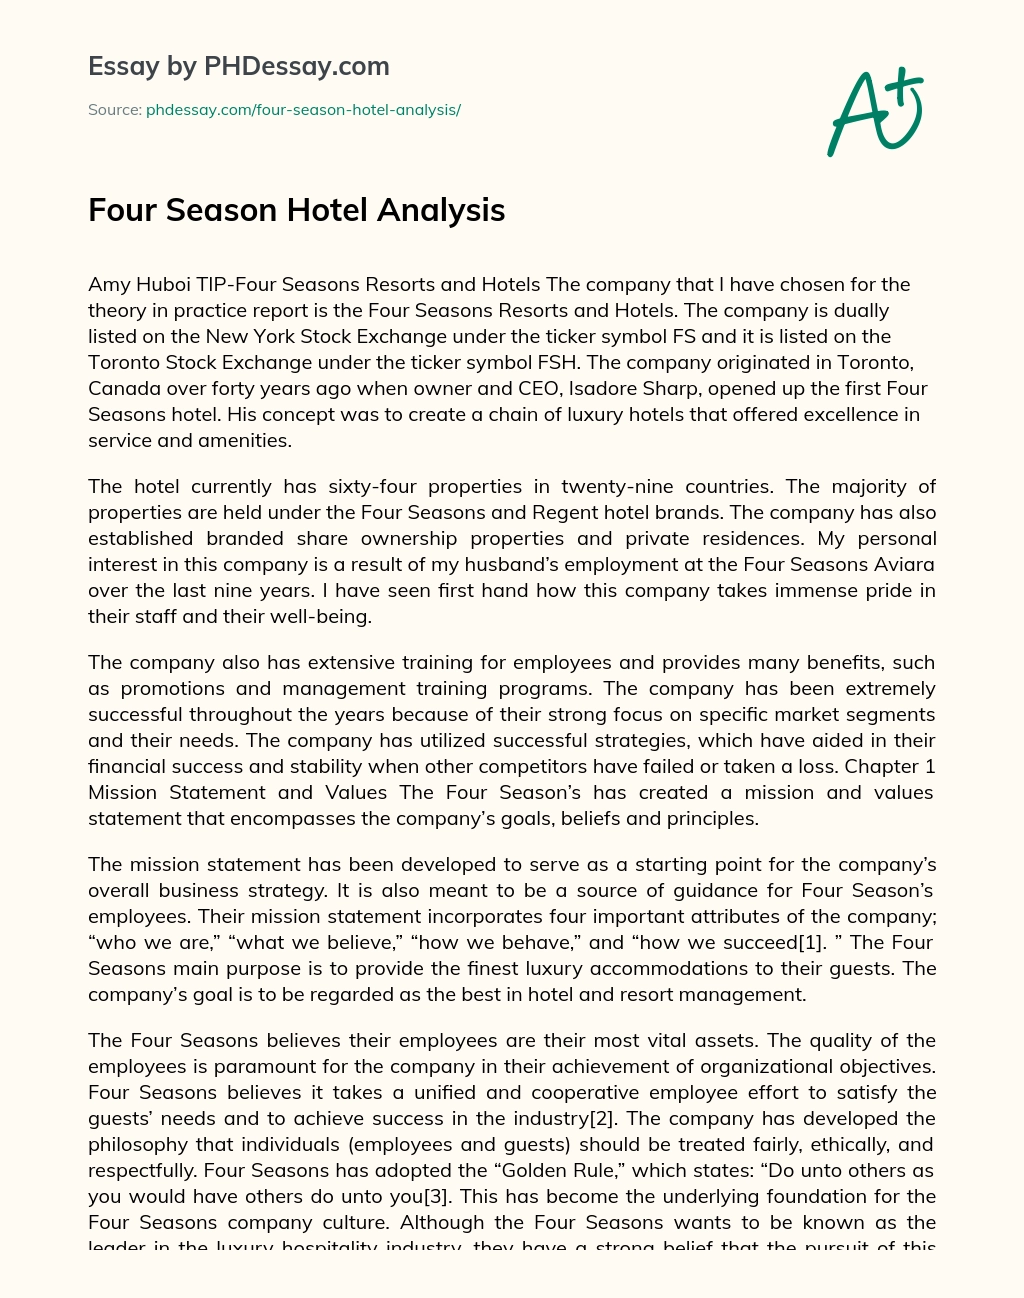 Four Season Hotel Analysis essay